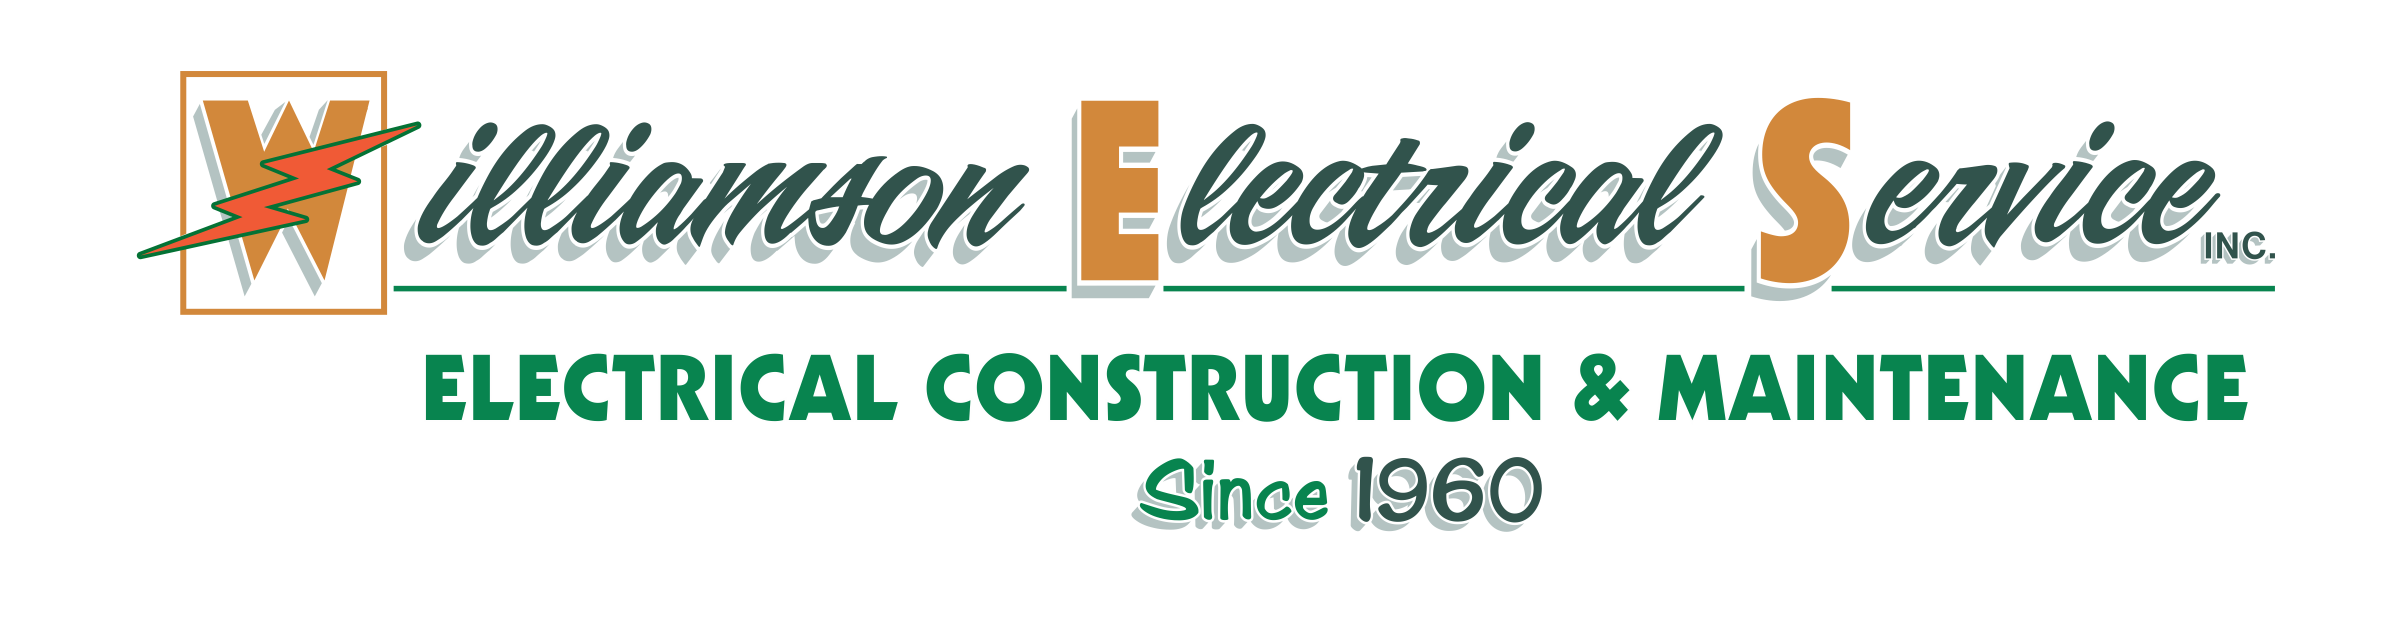 Williamson Electrical Service Inc.